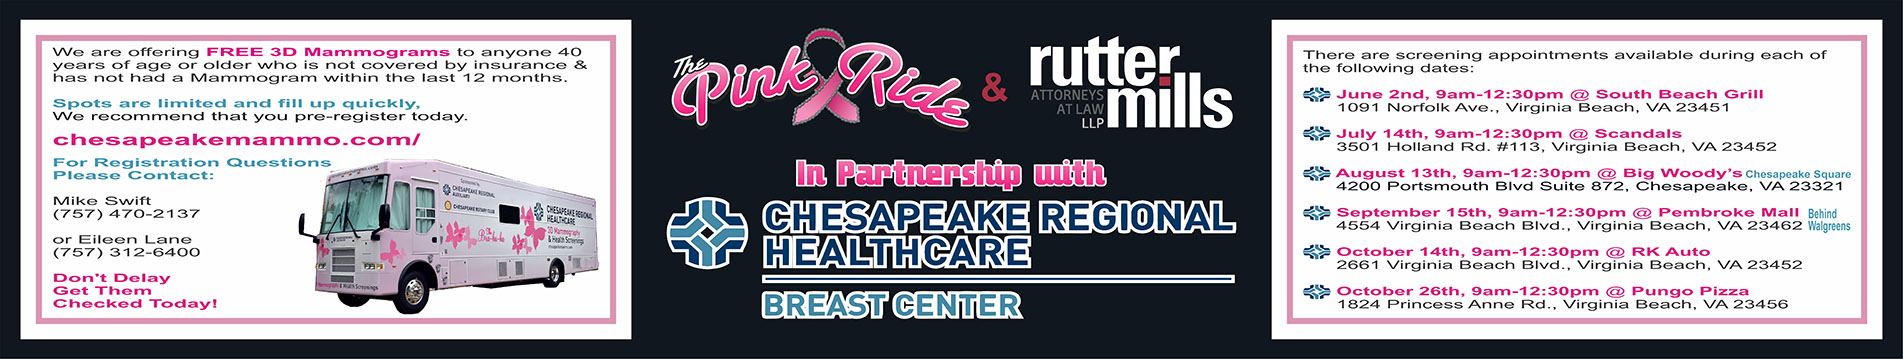 2022 Pink Ride Chesapeake Regional Healthcare Free Mammogram Event